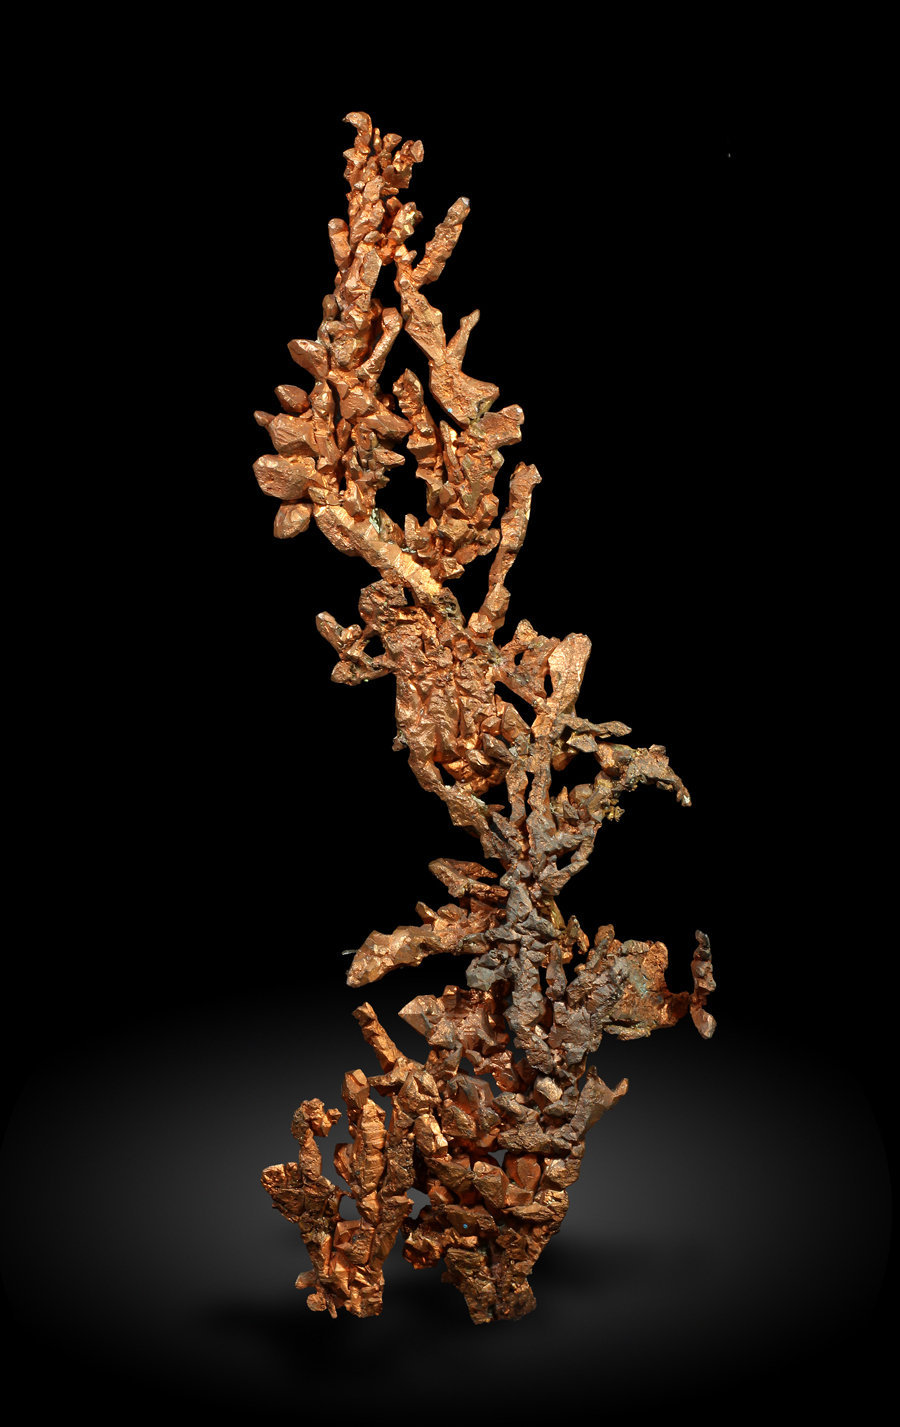 specimens/s_imagesAC2/Copper-MF98AC2f.jpg